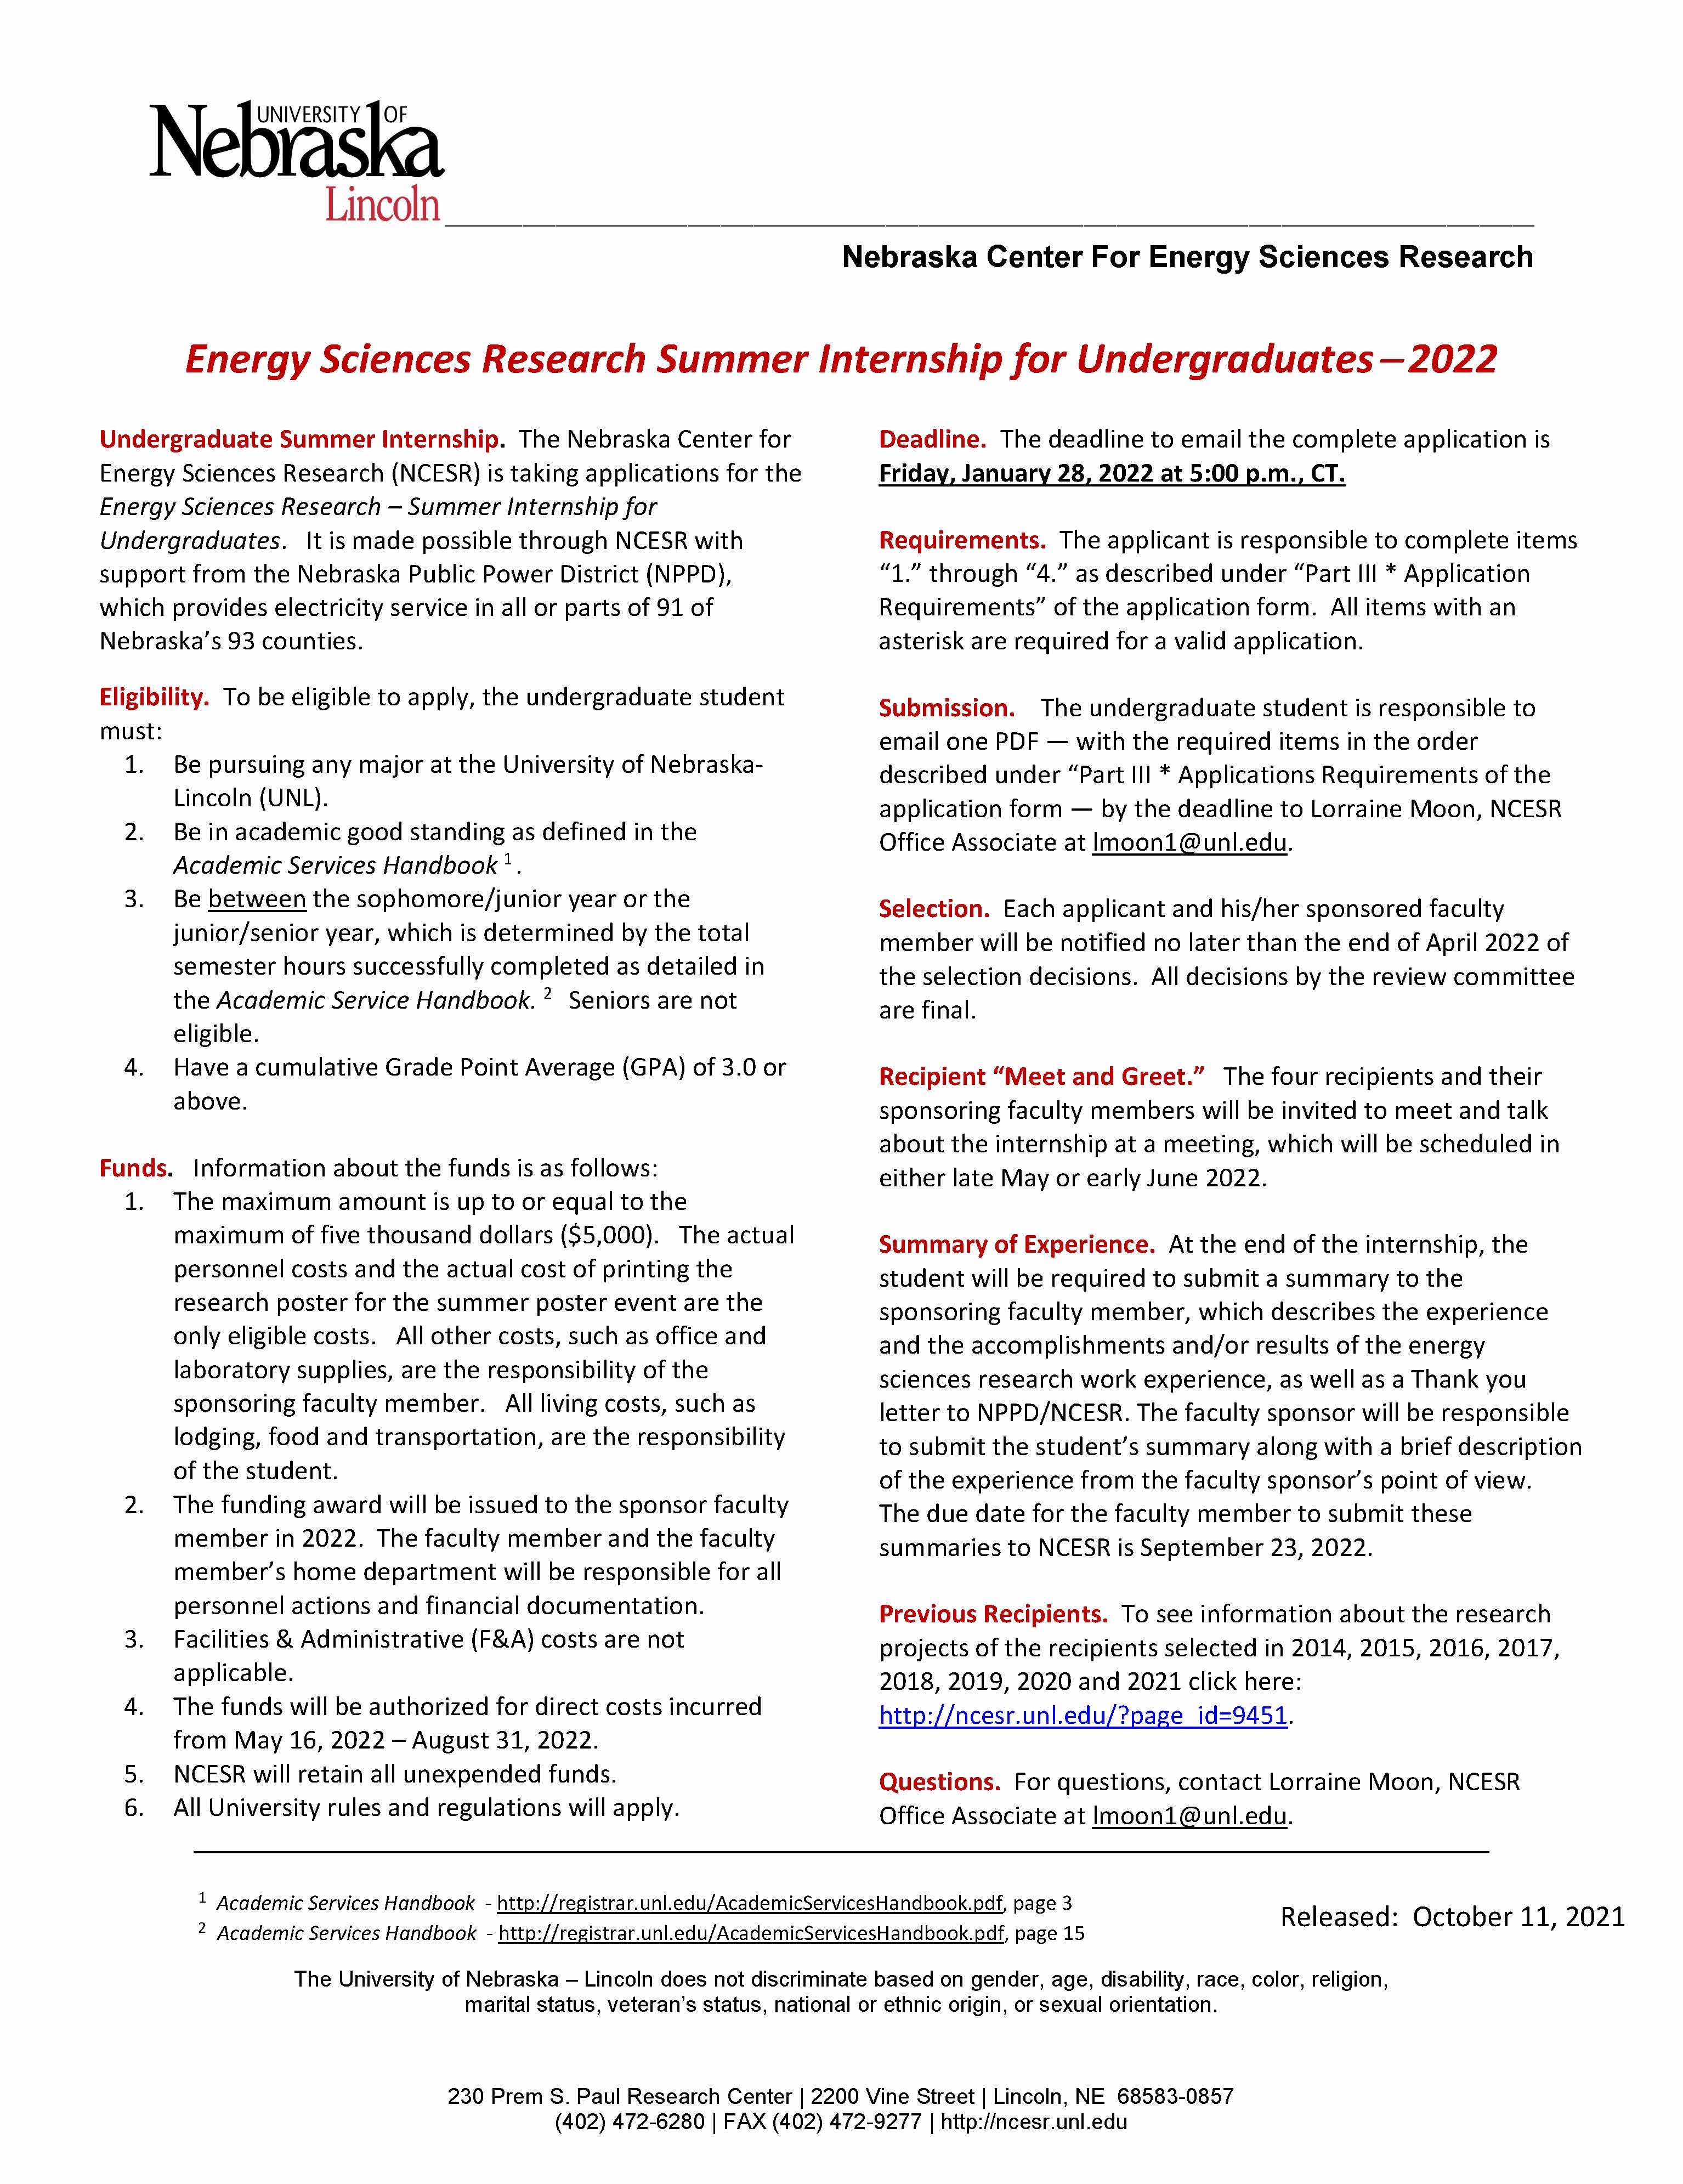 Energy Sciences Research Summer Internship for Undergraduates − 2022